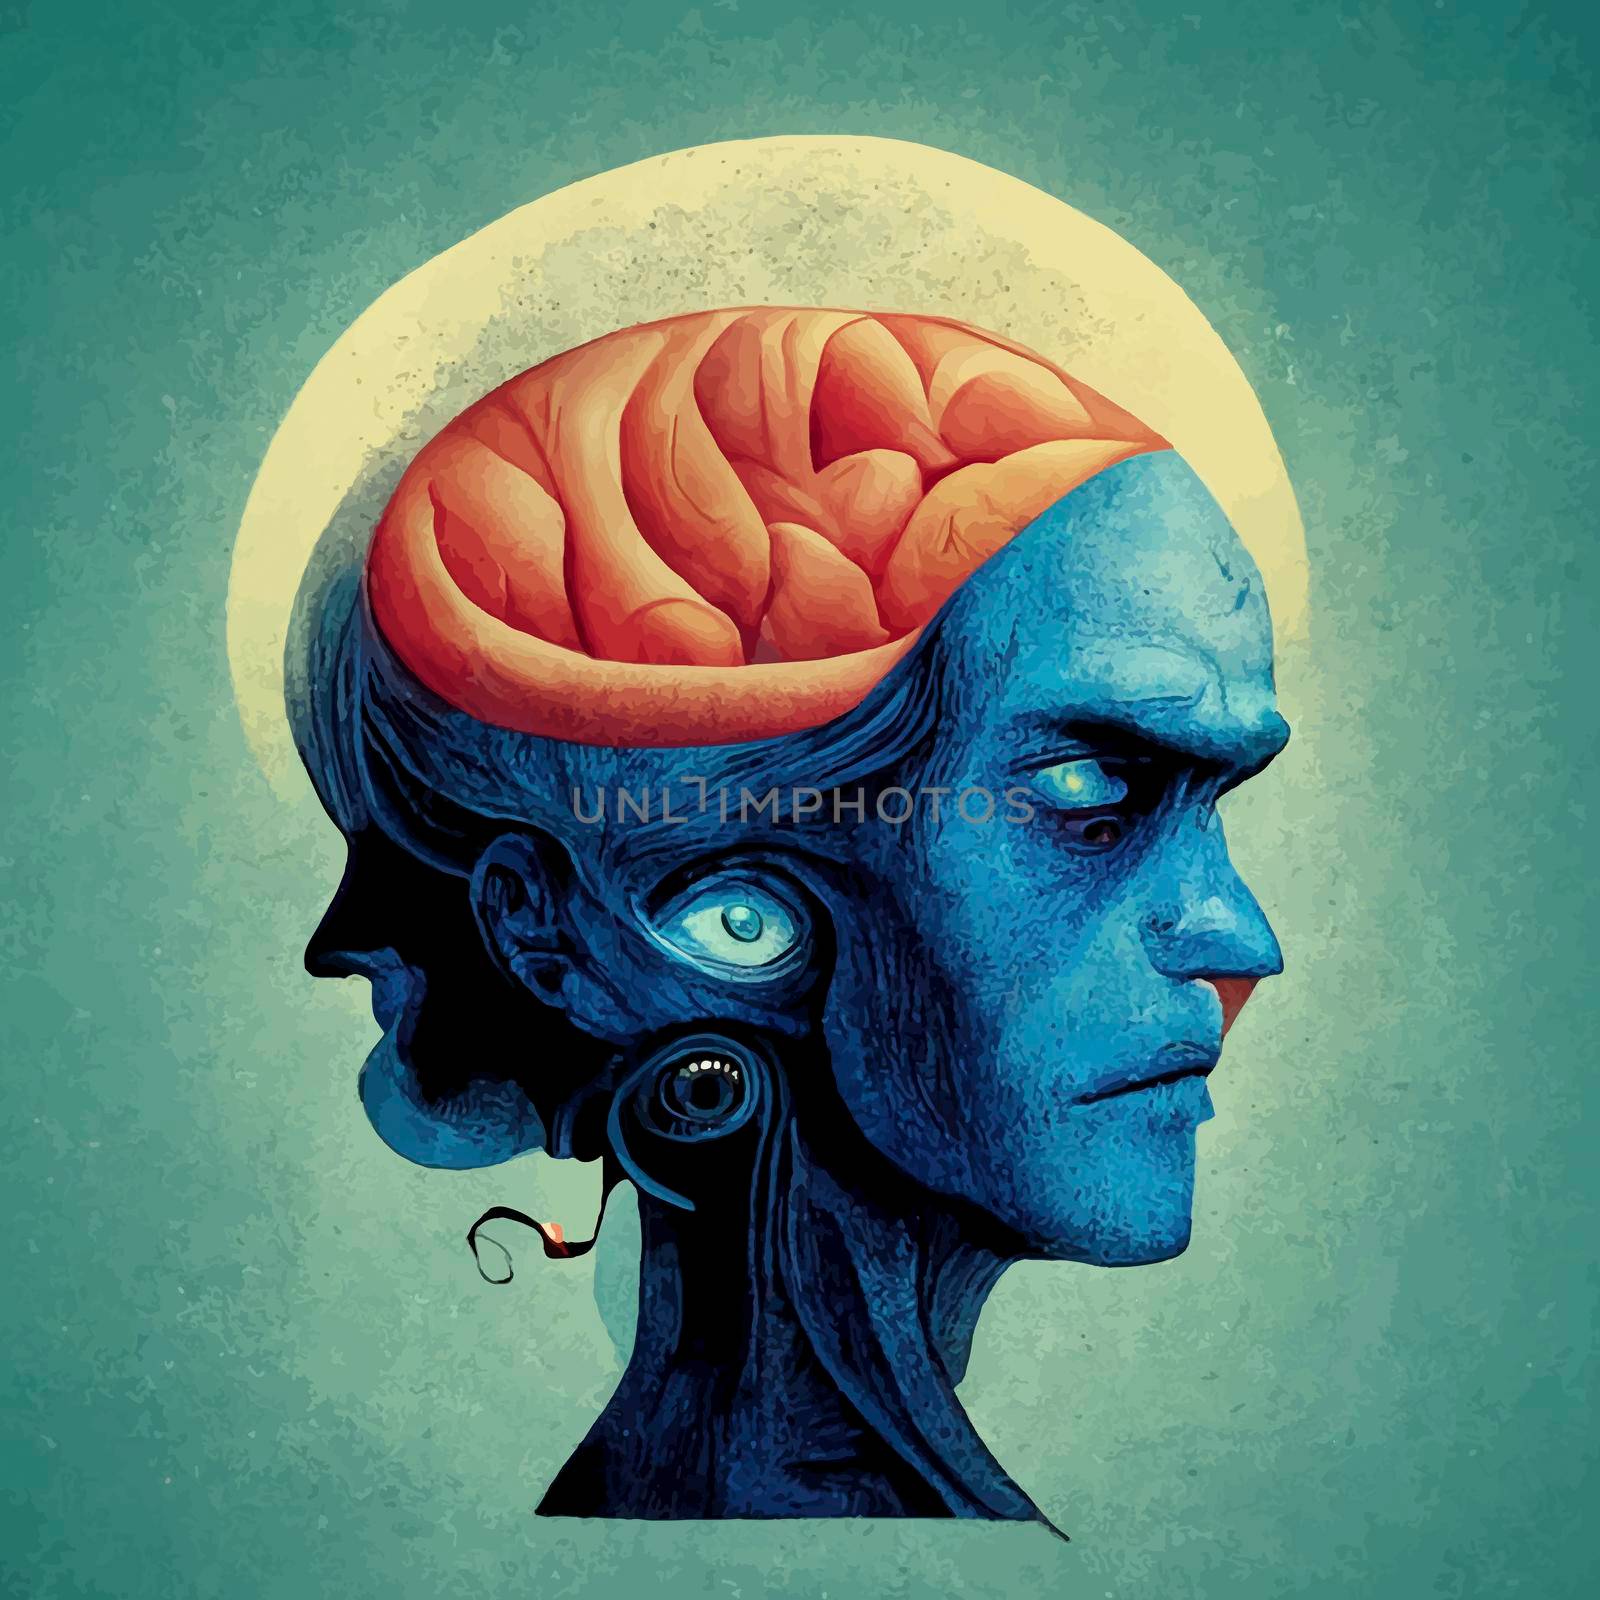 illustration of the human brain. blue 2d illustration of the human brain by JpRamos